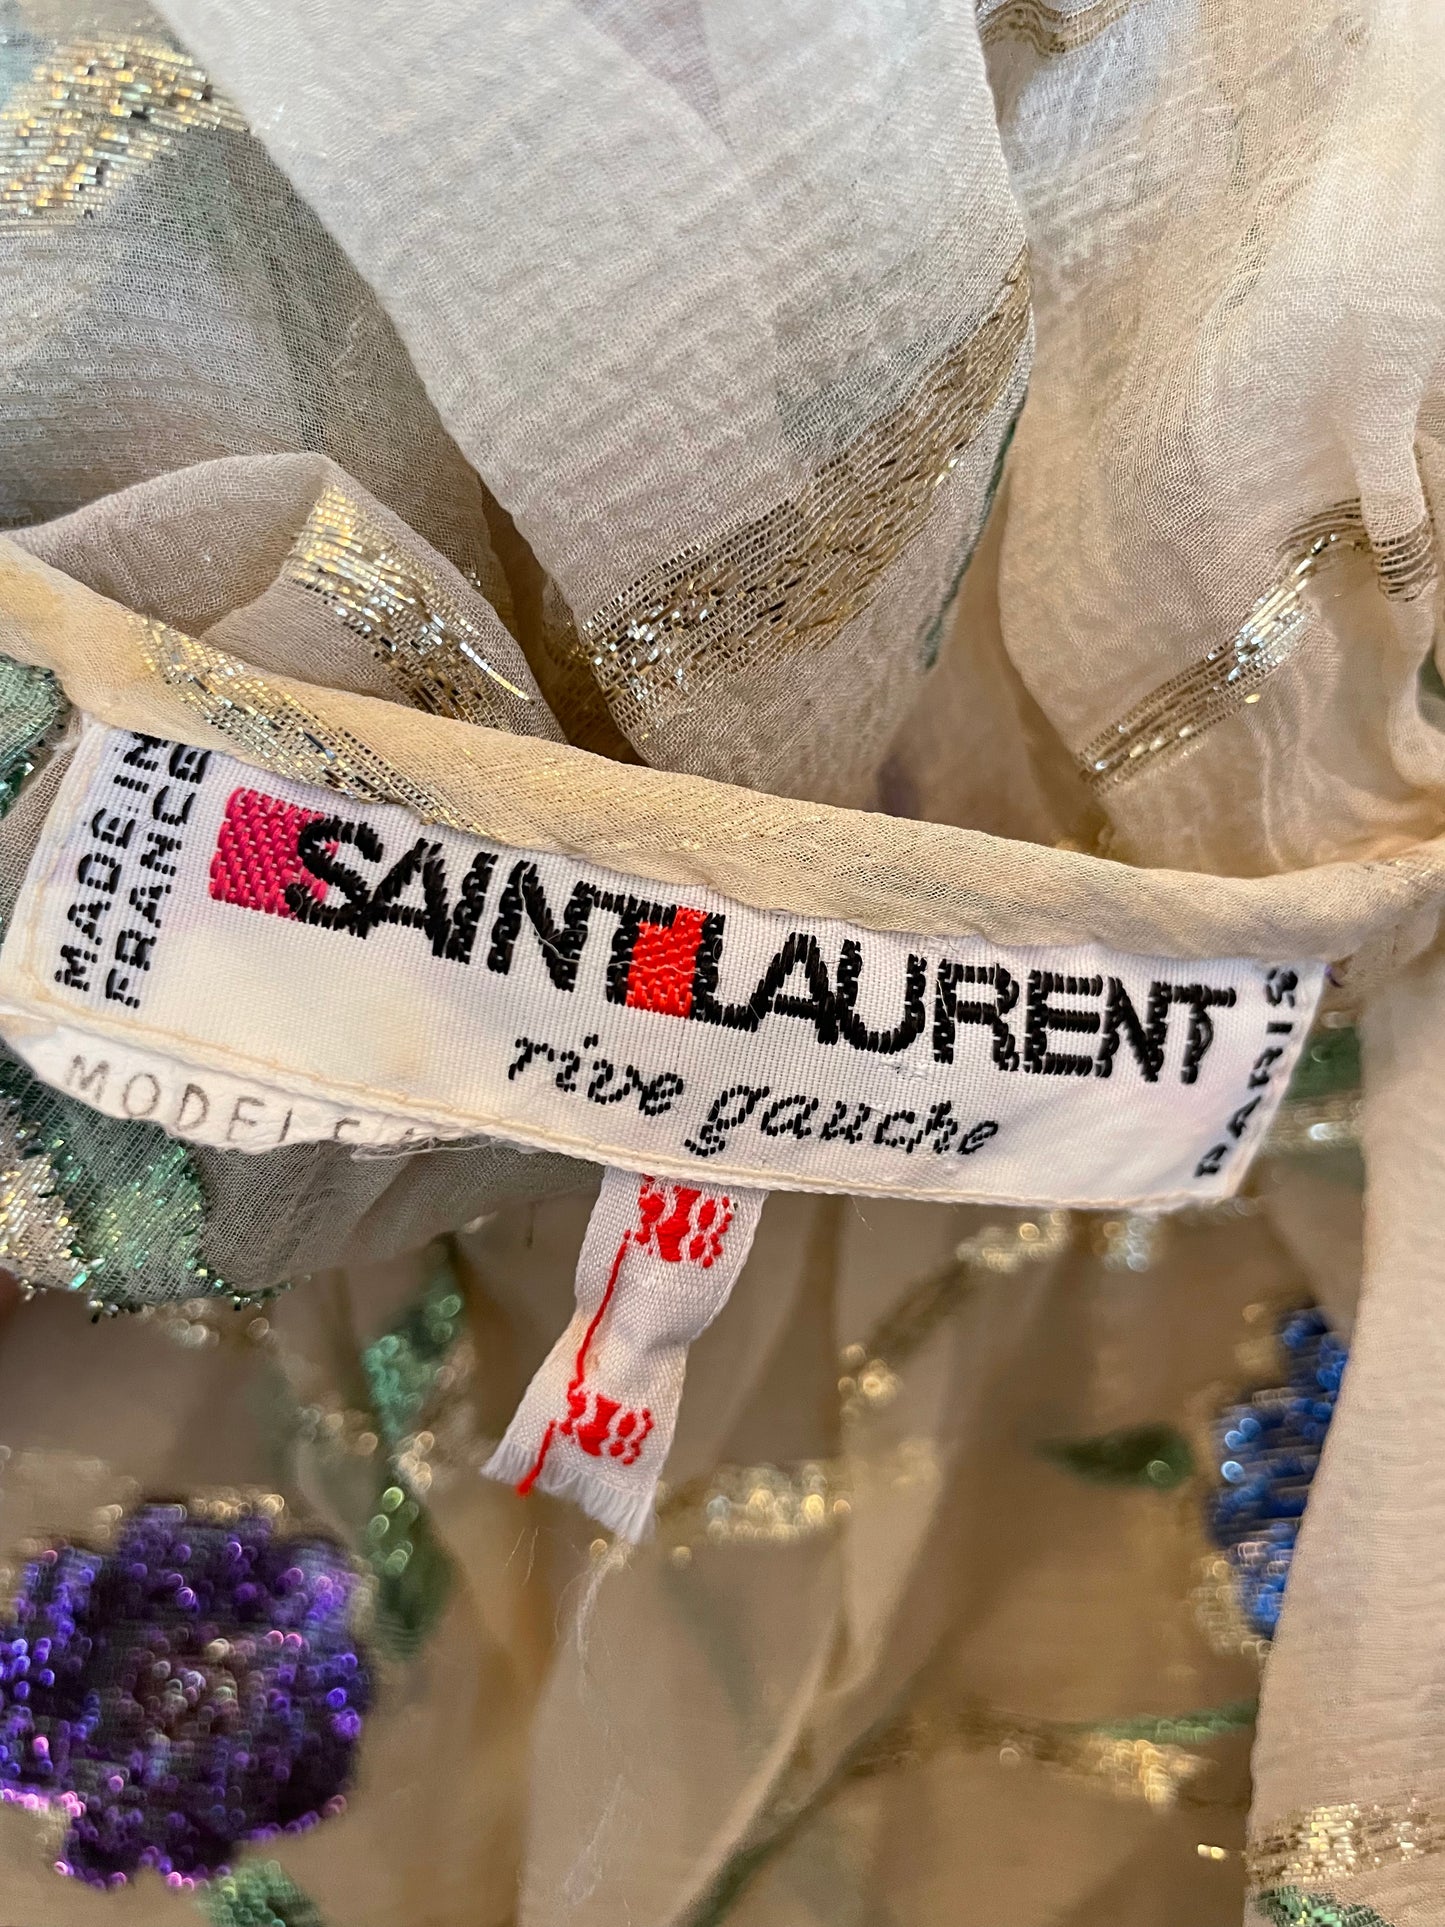 Yves Saint Laurent Sheer & Metallic Floral Dress